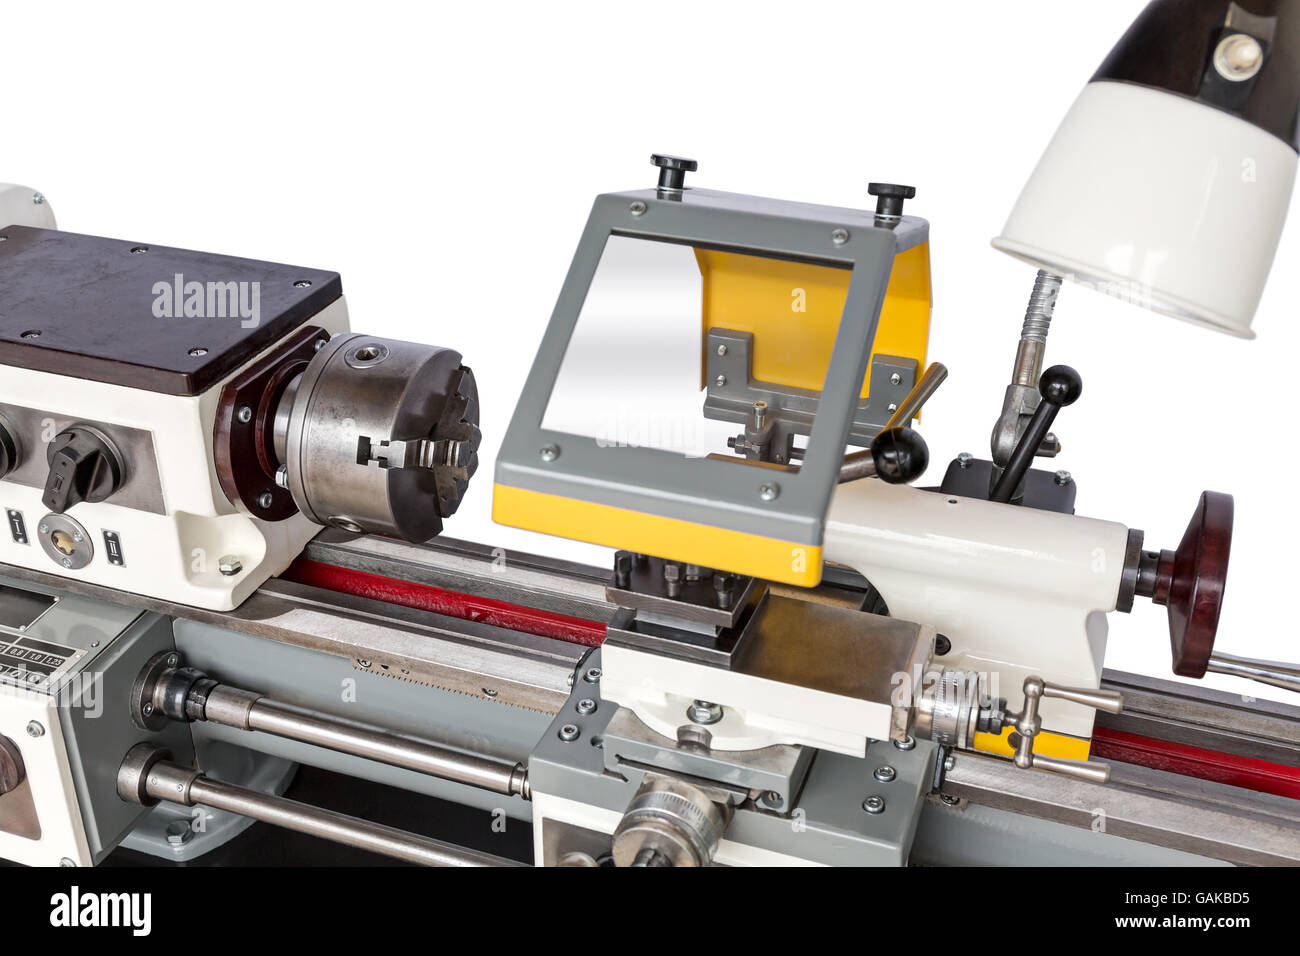 Metal lathe machinery tool equipment in workshop Stock Photo.